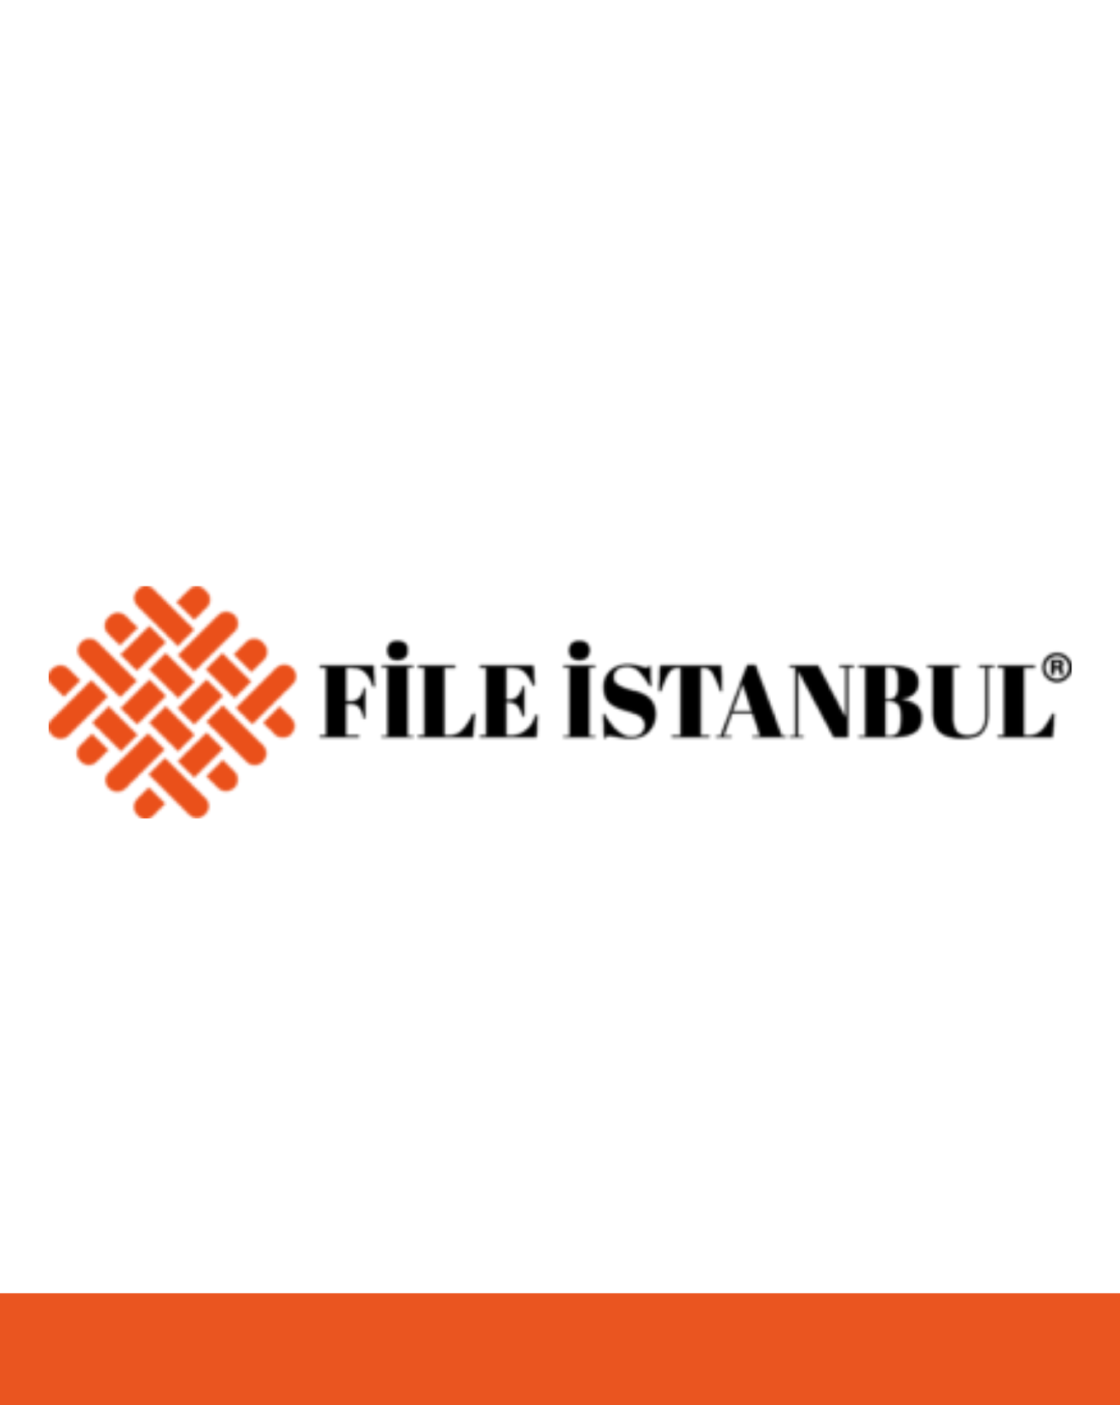 File İstanbul